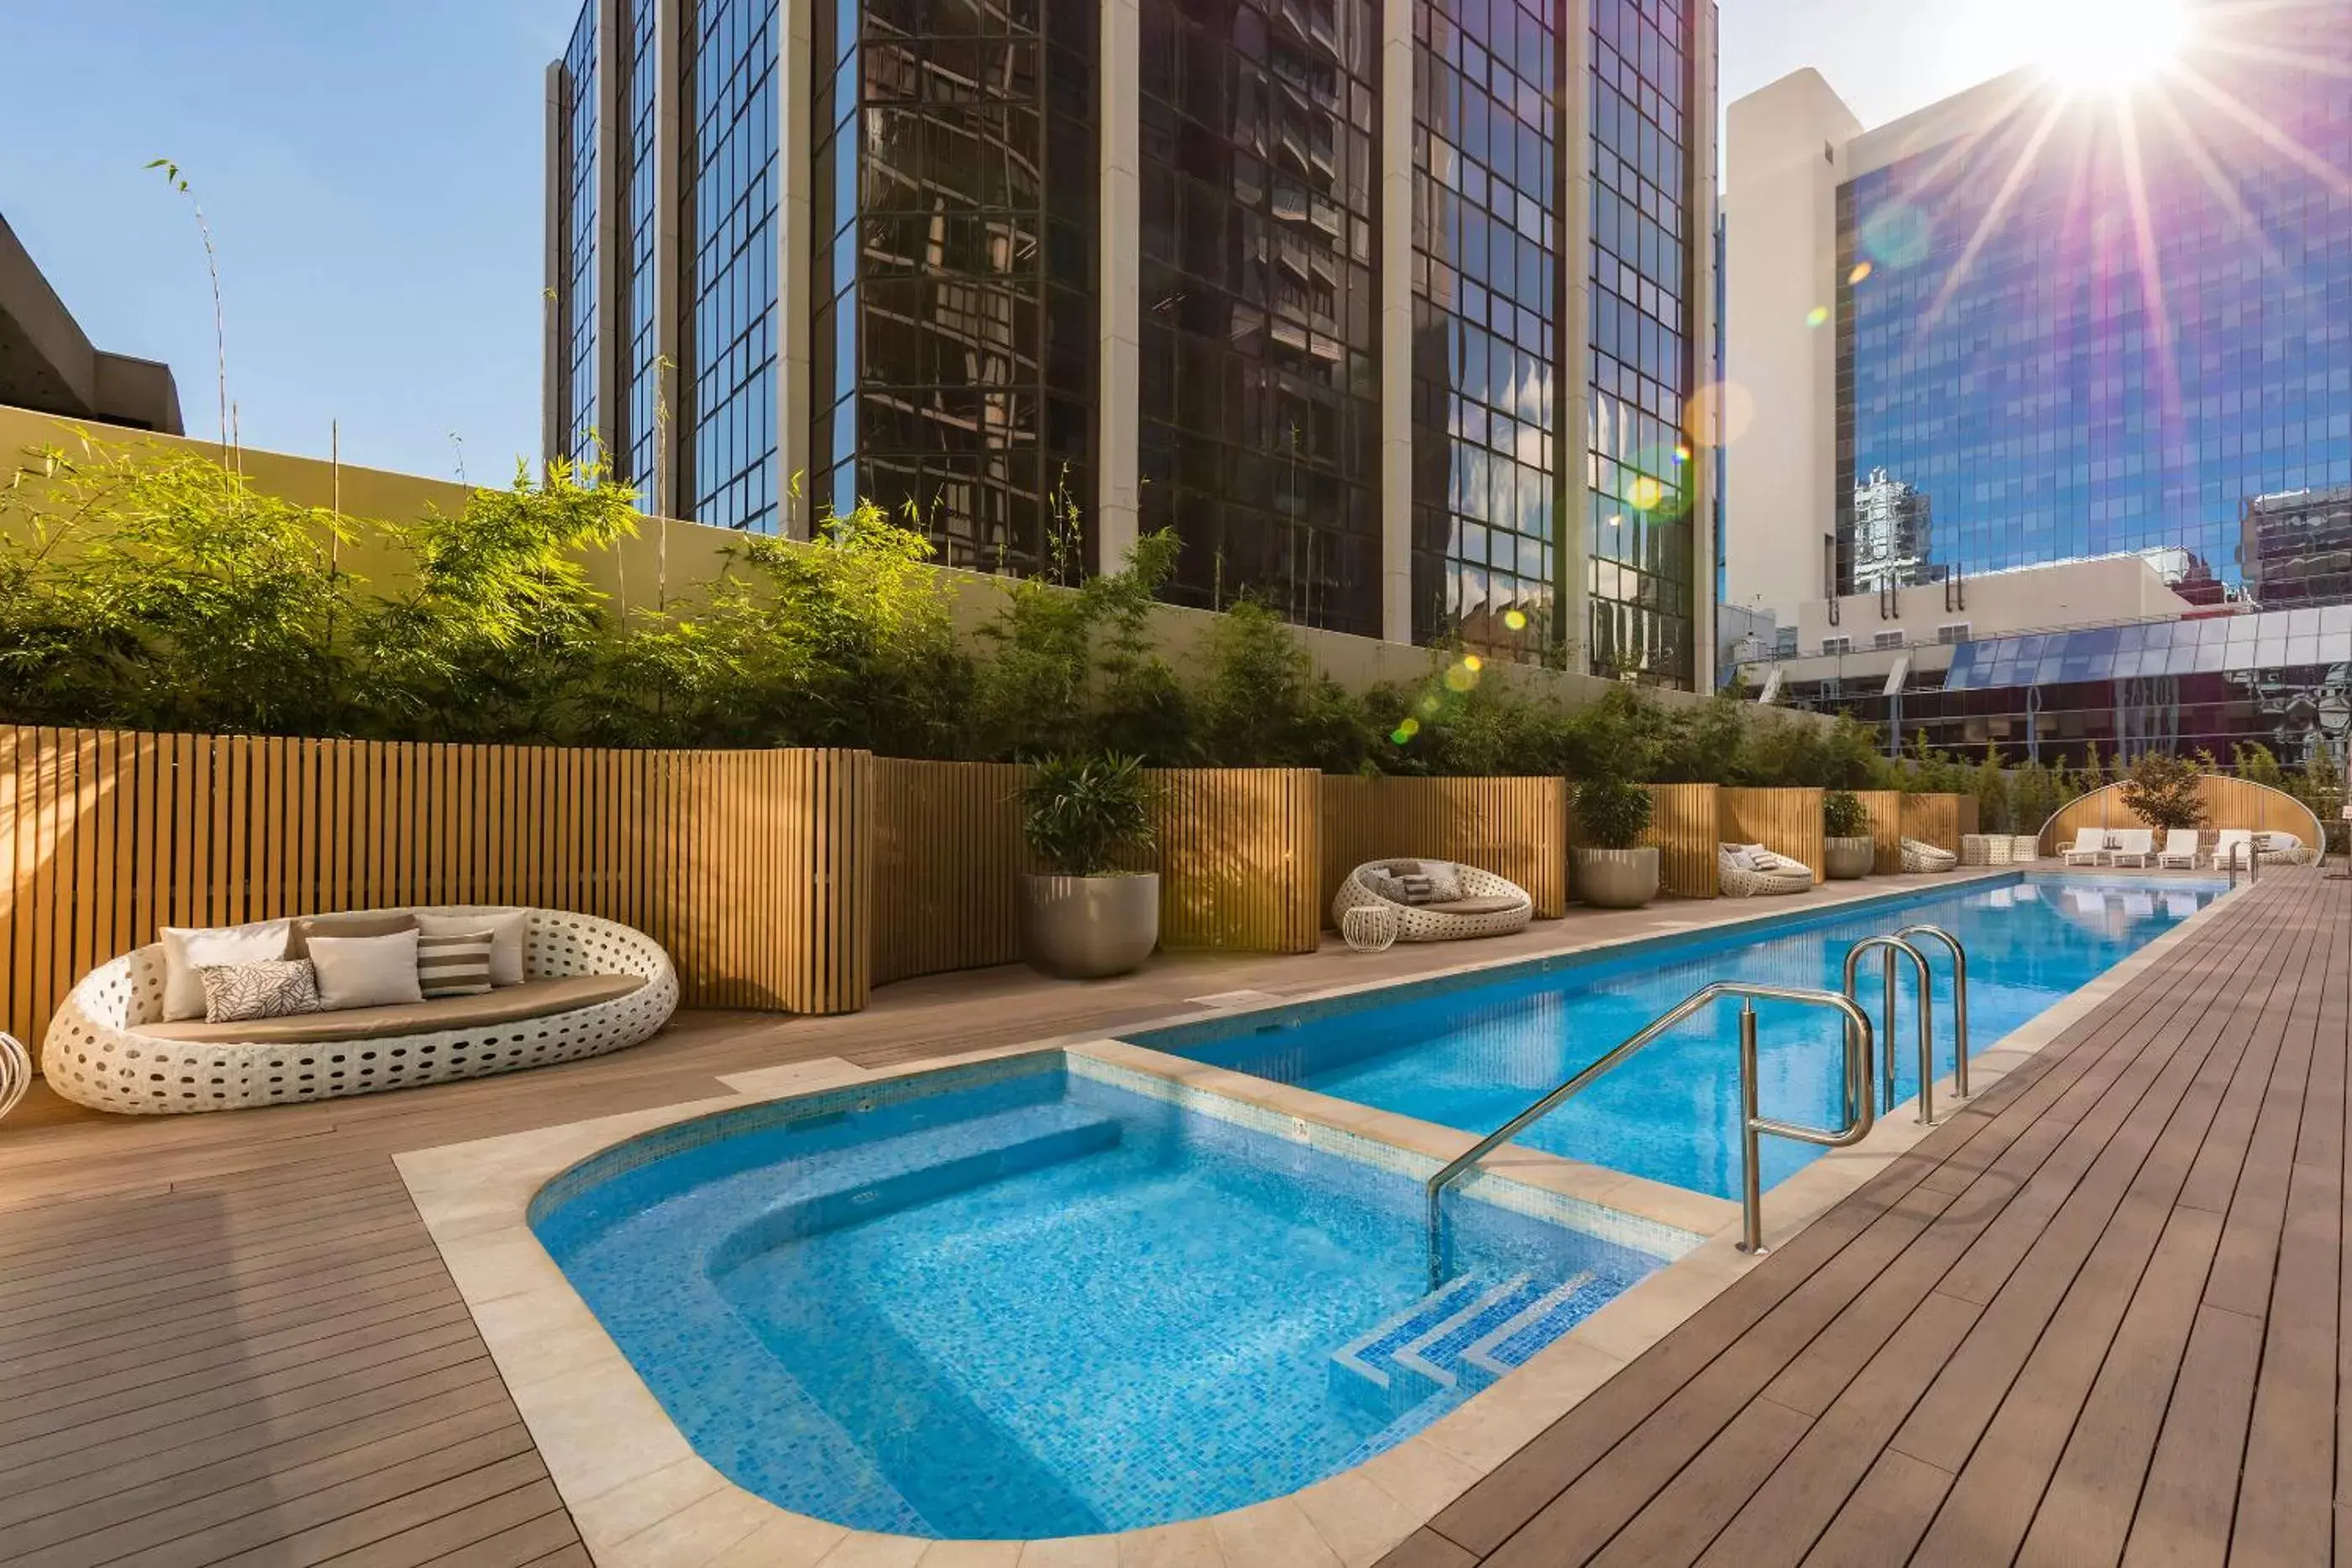 Swimming Pool in SKYE Hotel Suites Parramatta